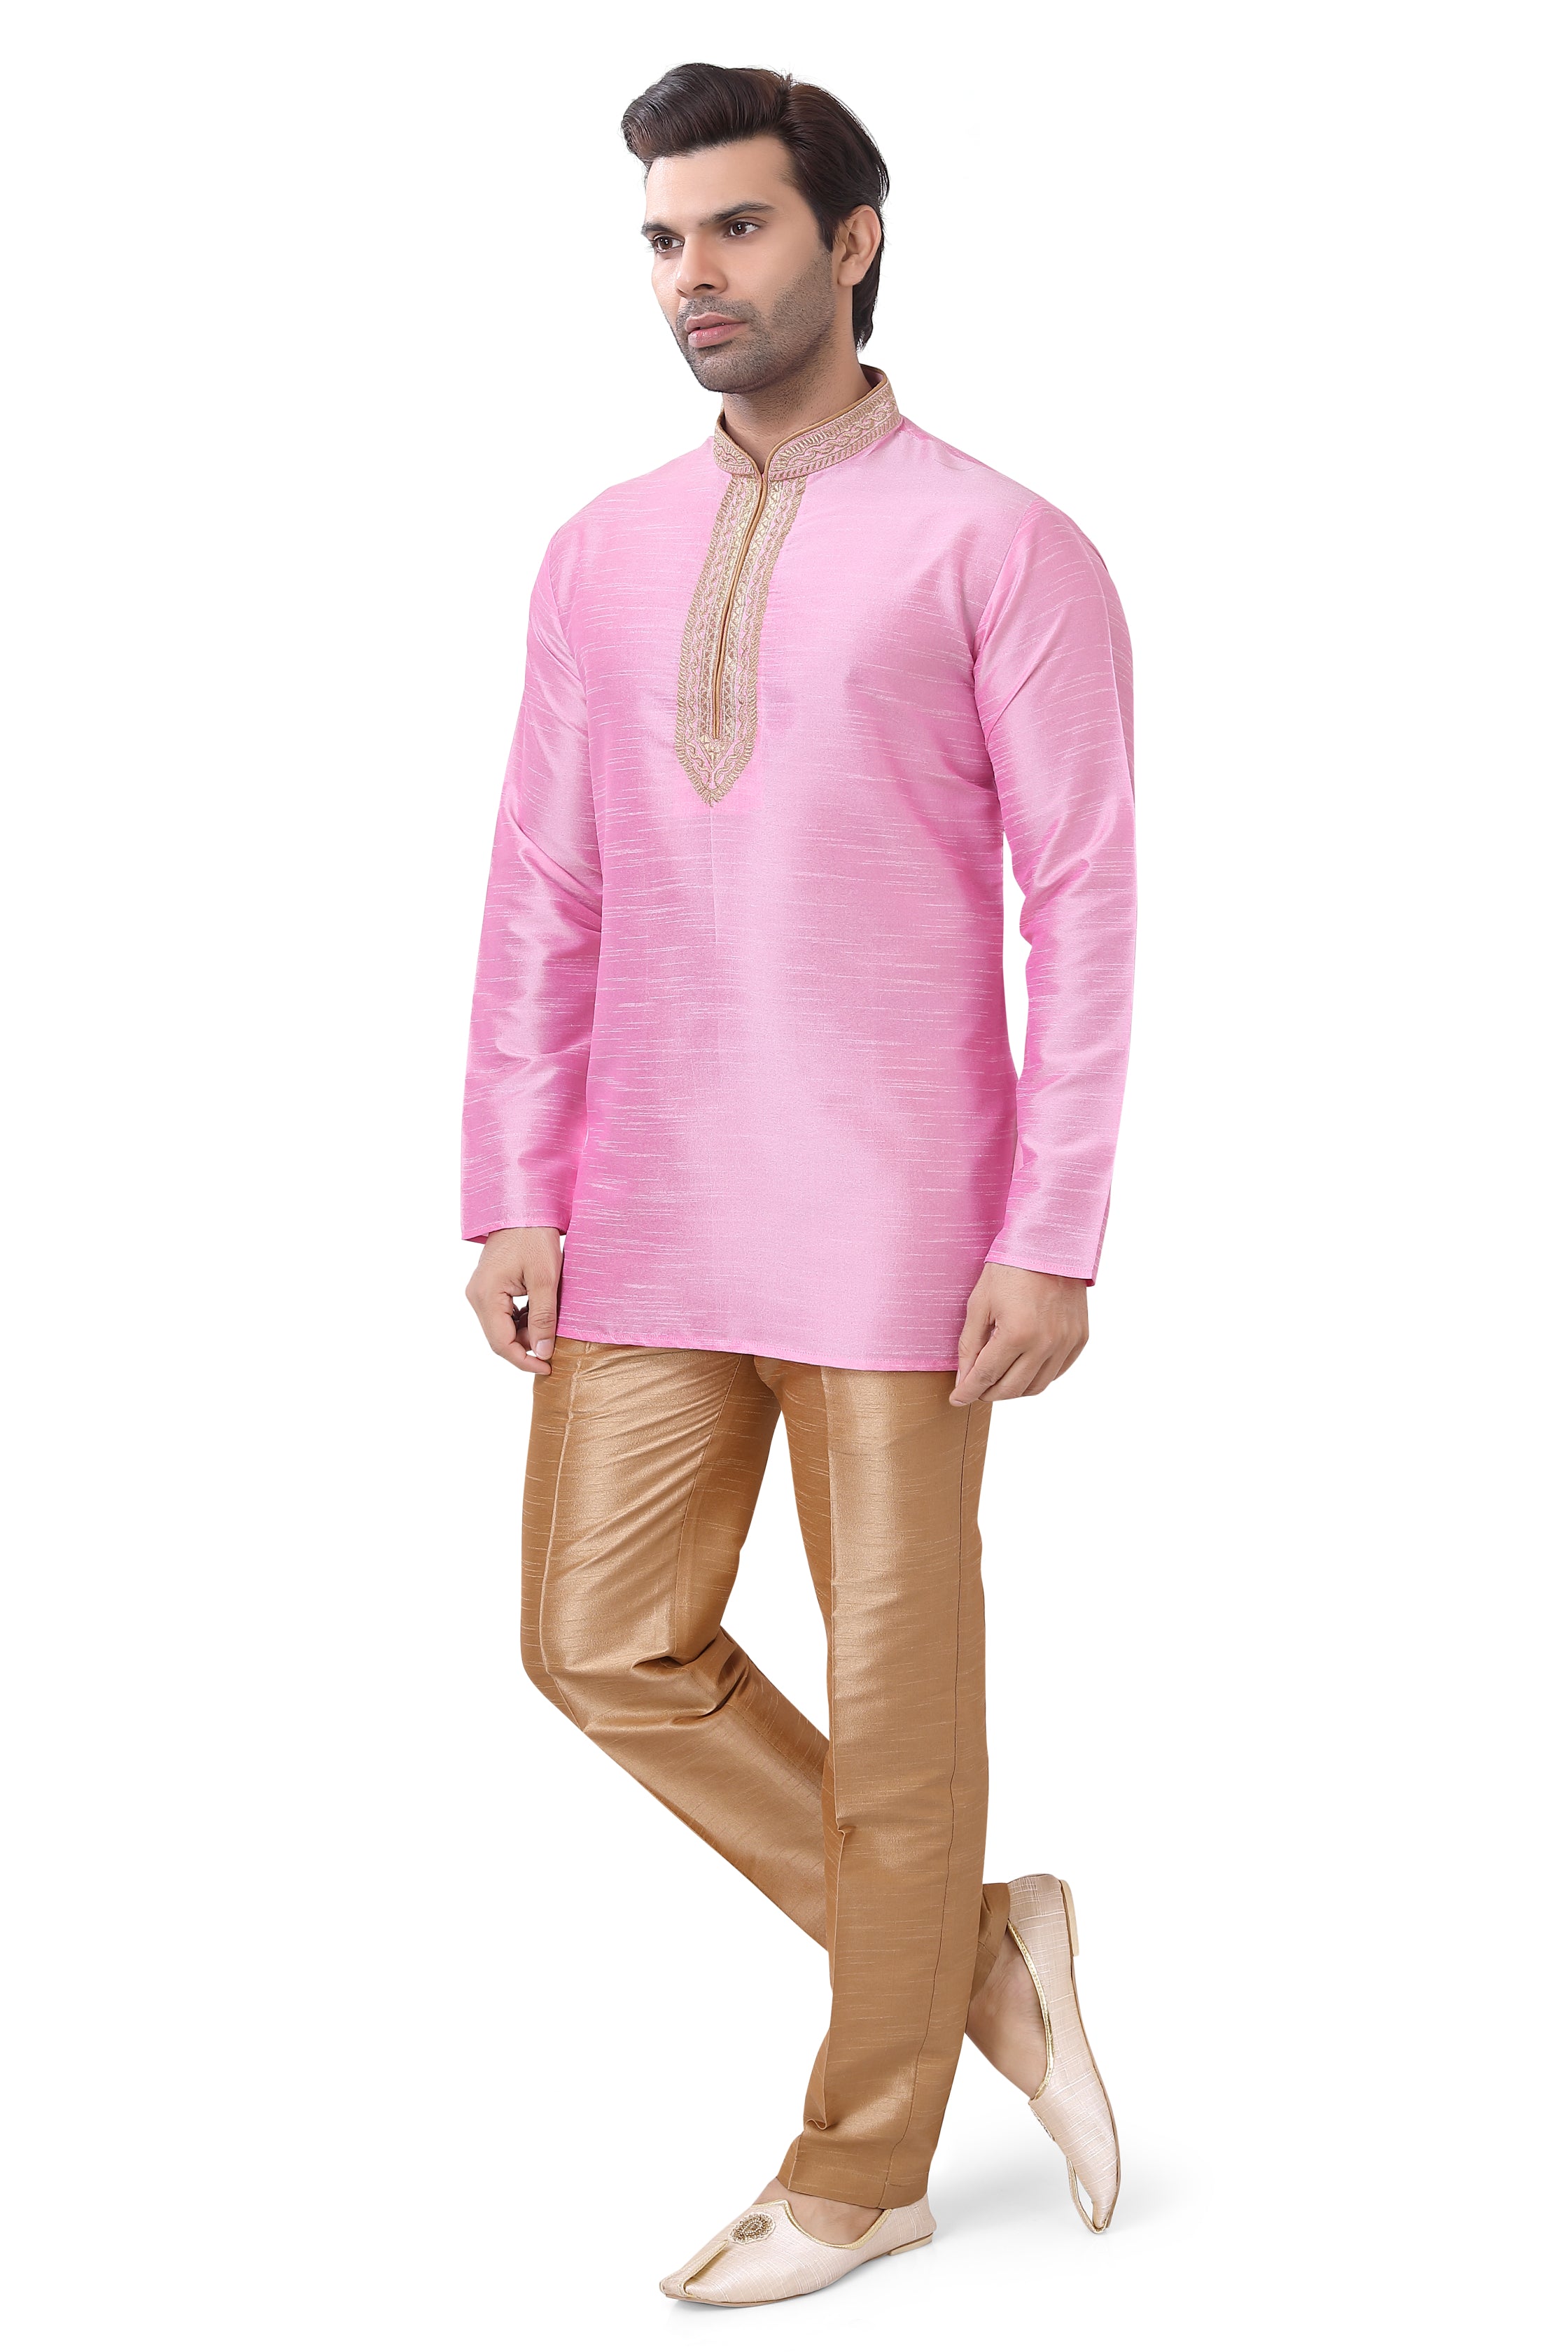 Banarasi Dupion Silk Short Kurta with embroidery in Pink color